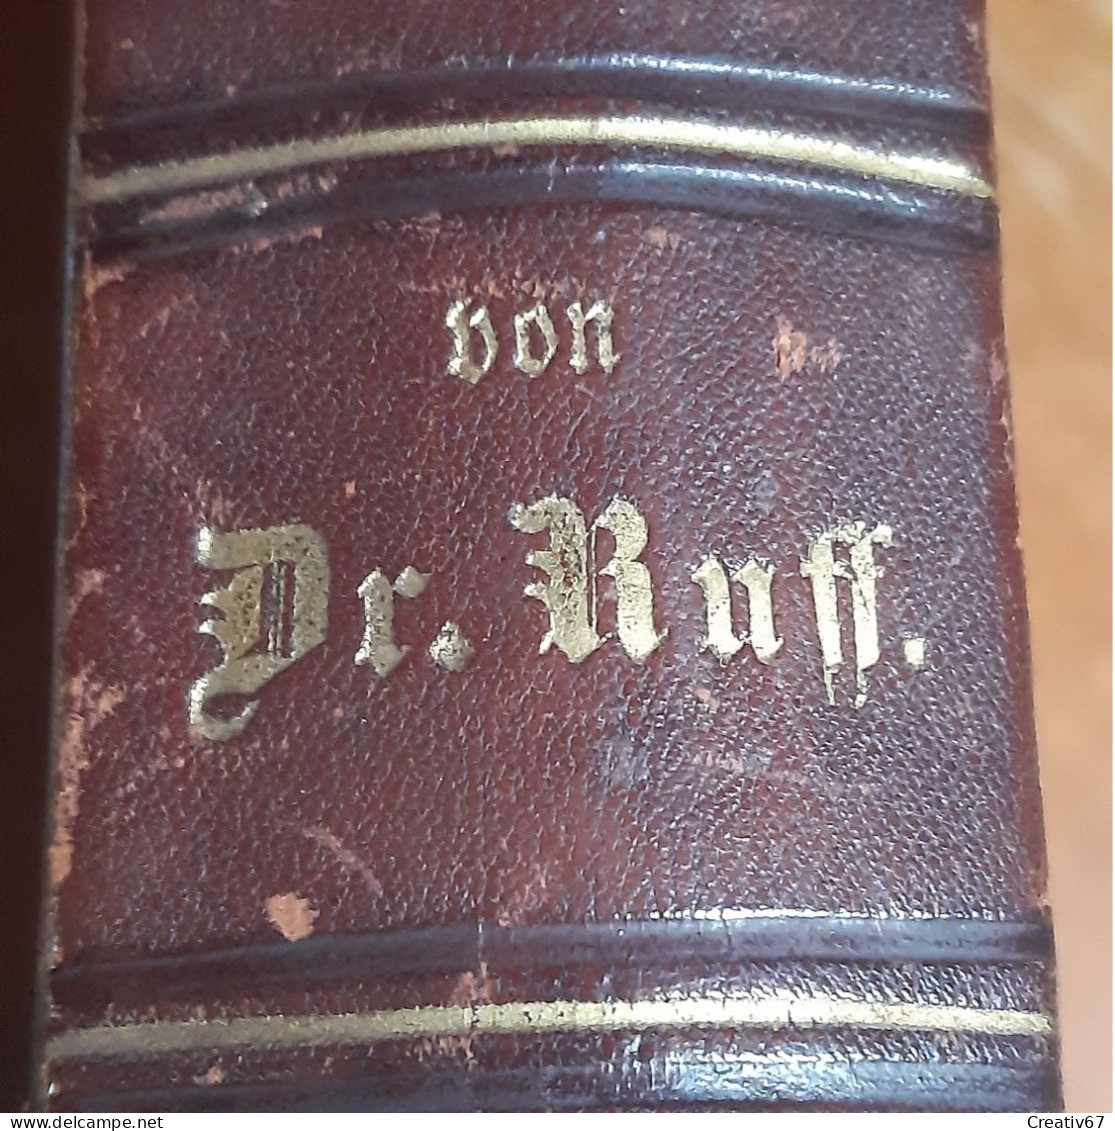 Gesundheit Lexikon Von Dr. Ruff 1882 Illustré Relié Cuir Très Bon état Selon Photos (cs) - Woordenboeken